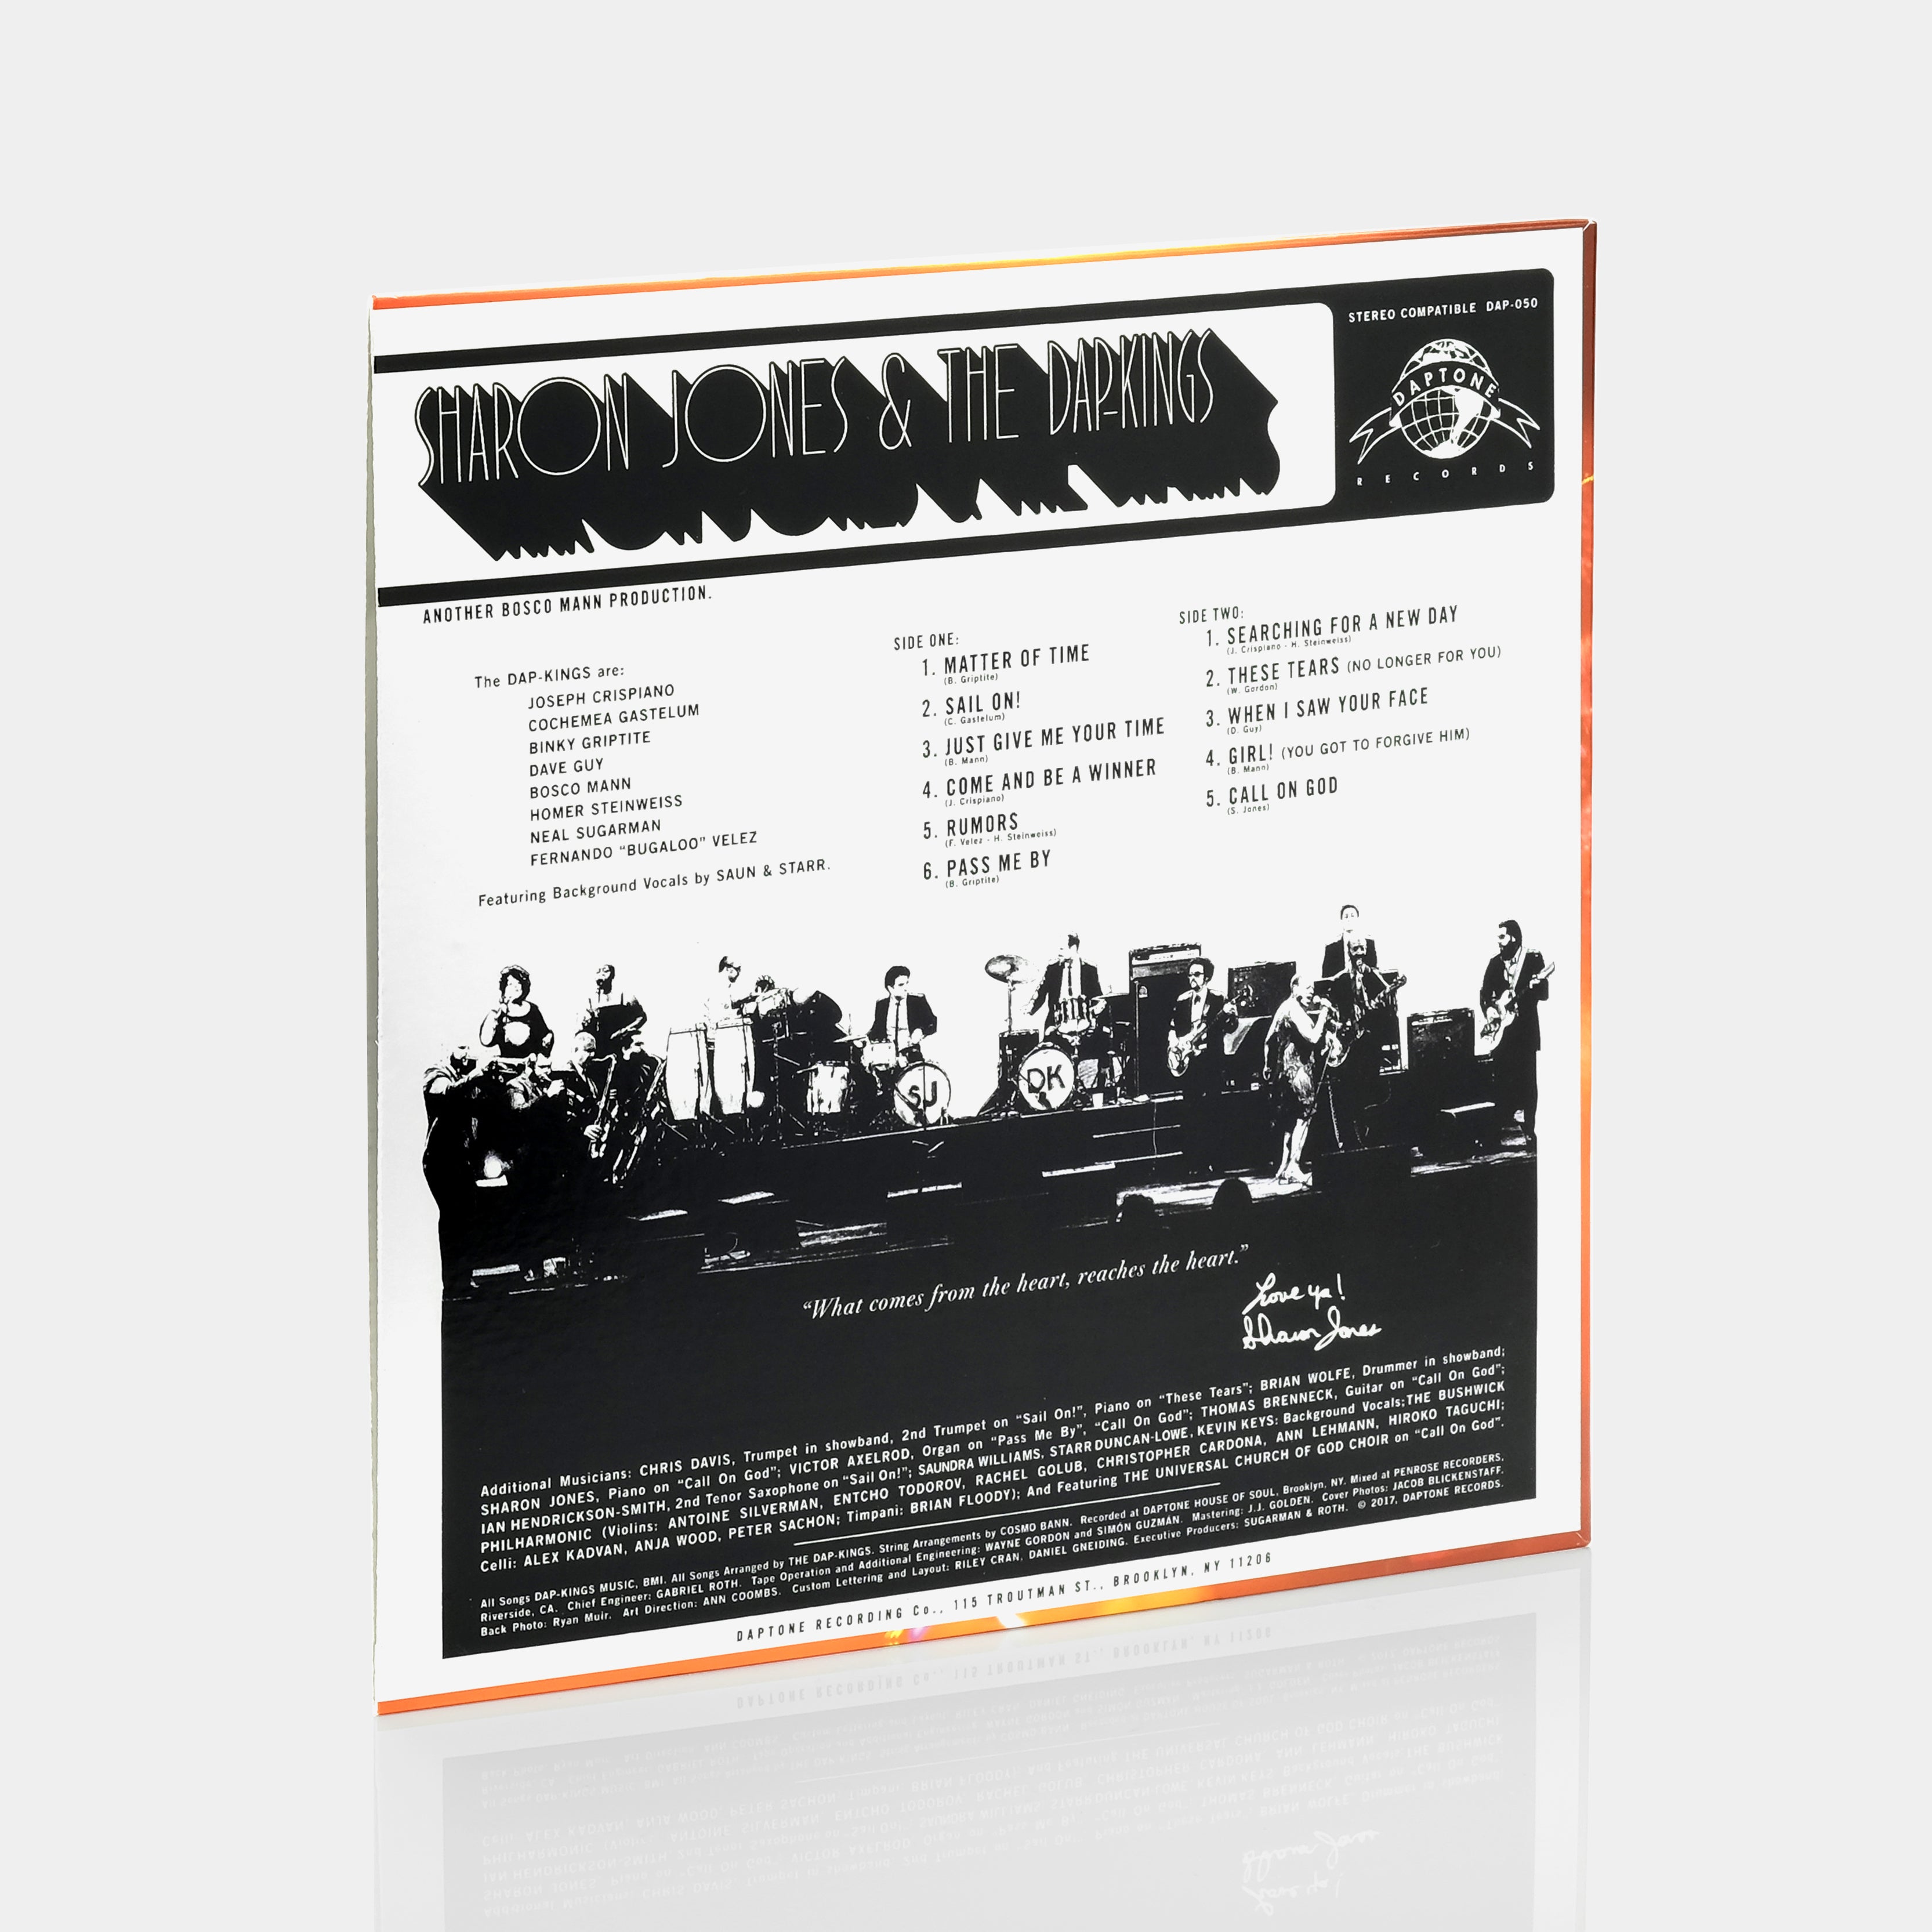 Sharon Jones & The Dap-Kings - Soul of a Woman LP Vinyl Record